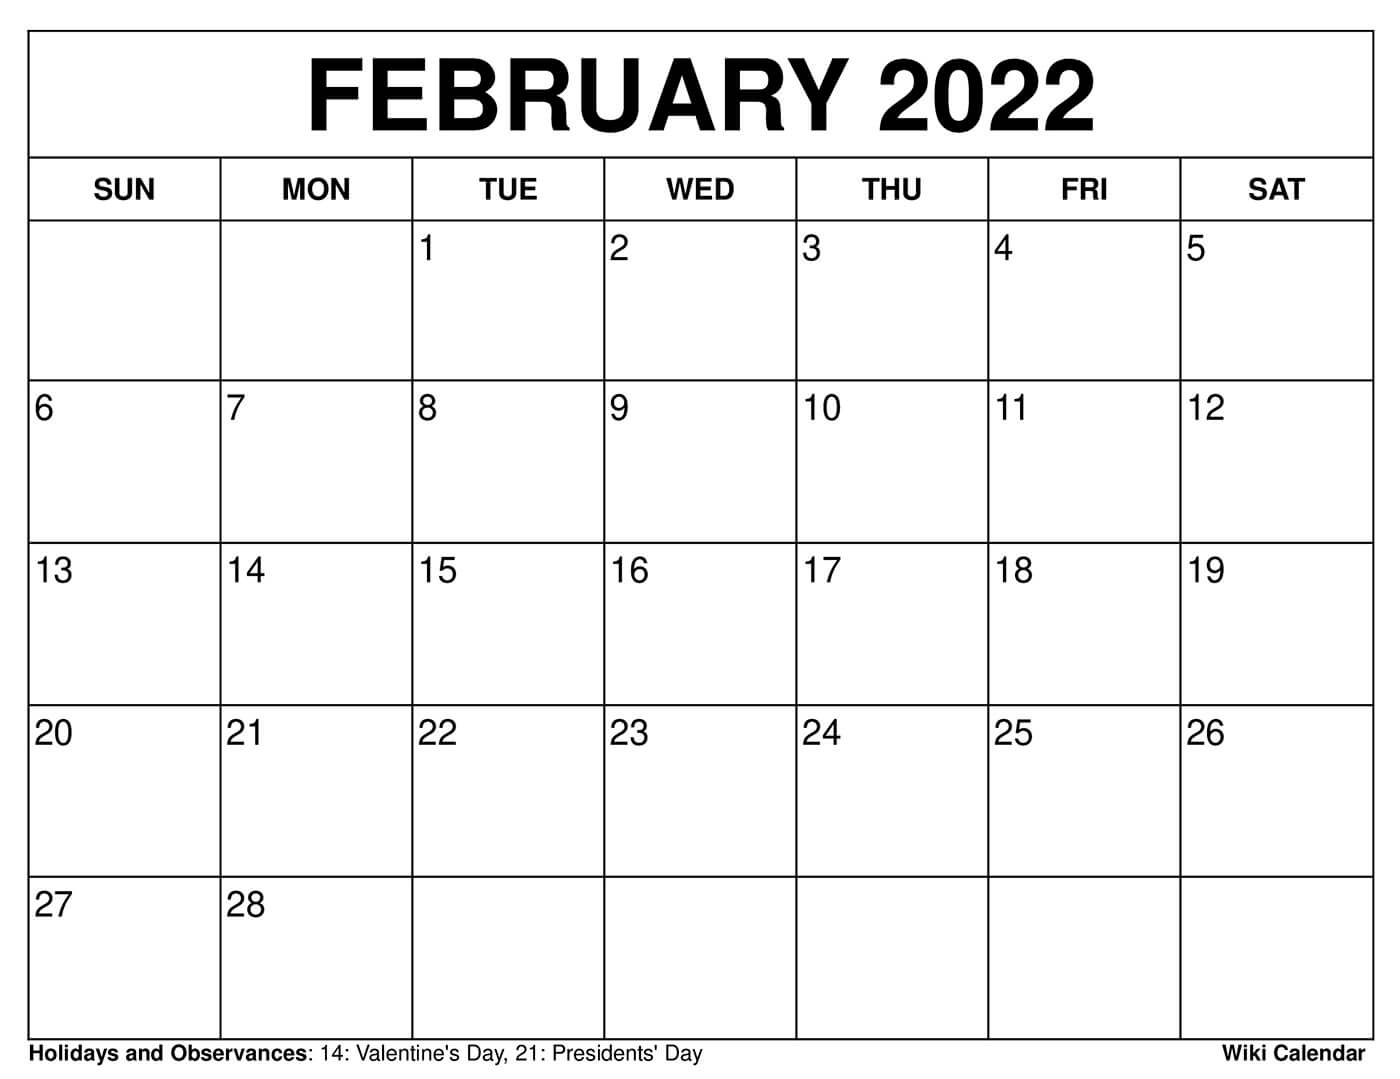 Feburary 2022 Calendar Free Printable February 2022 Calendars - Wiki Calendar